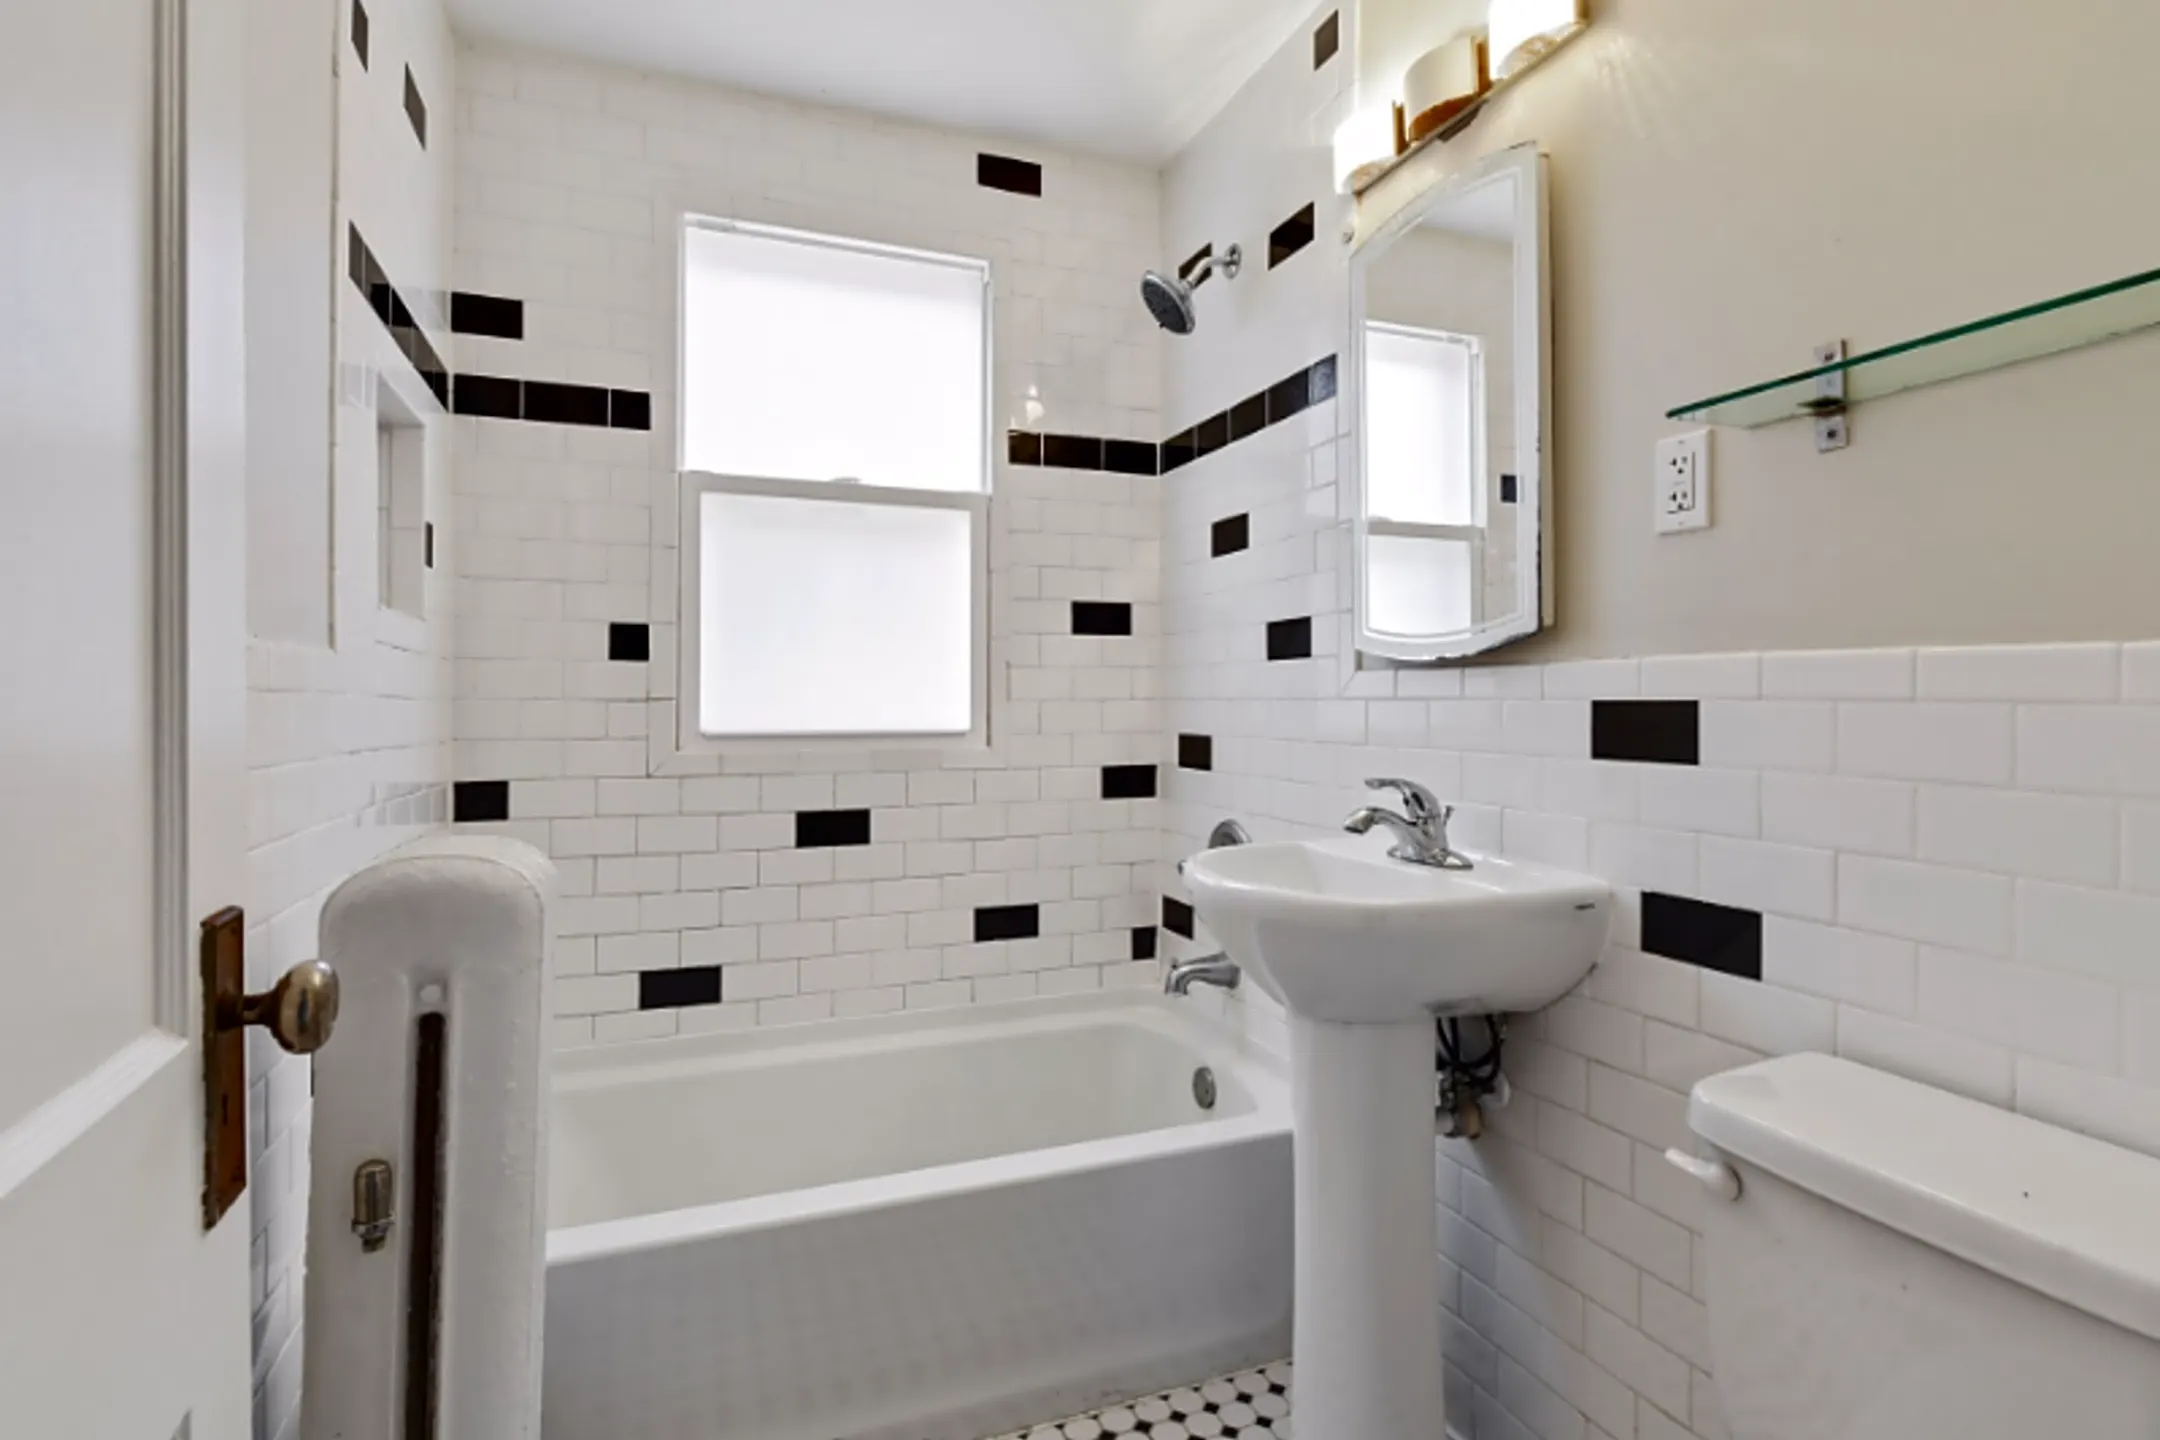 Bathroom - 245 Snelling Ave S - Saint Paul, MN